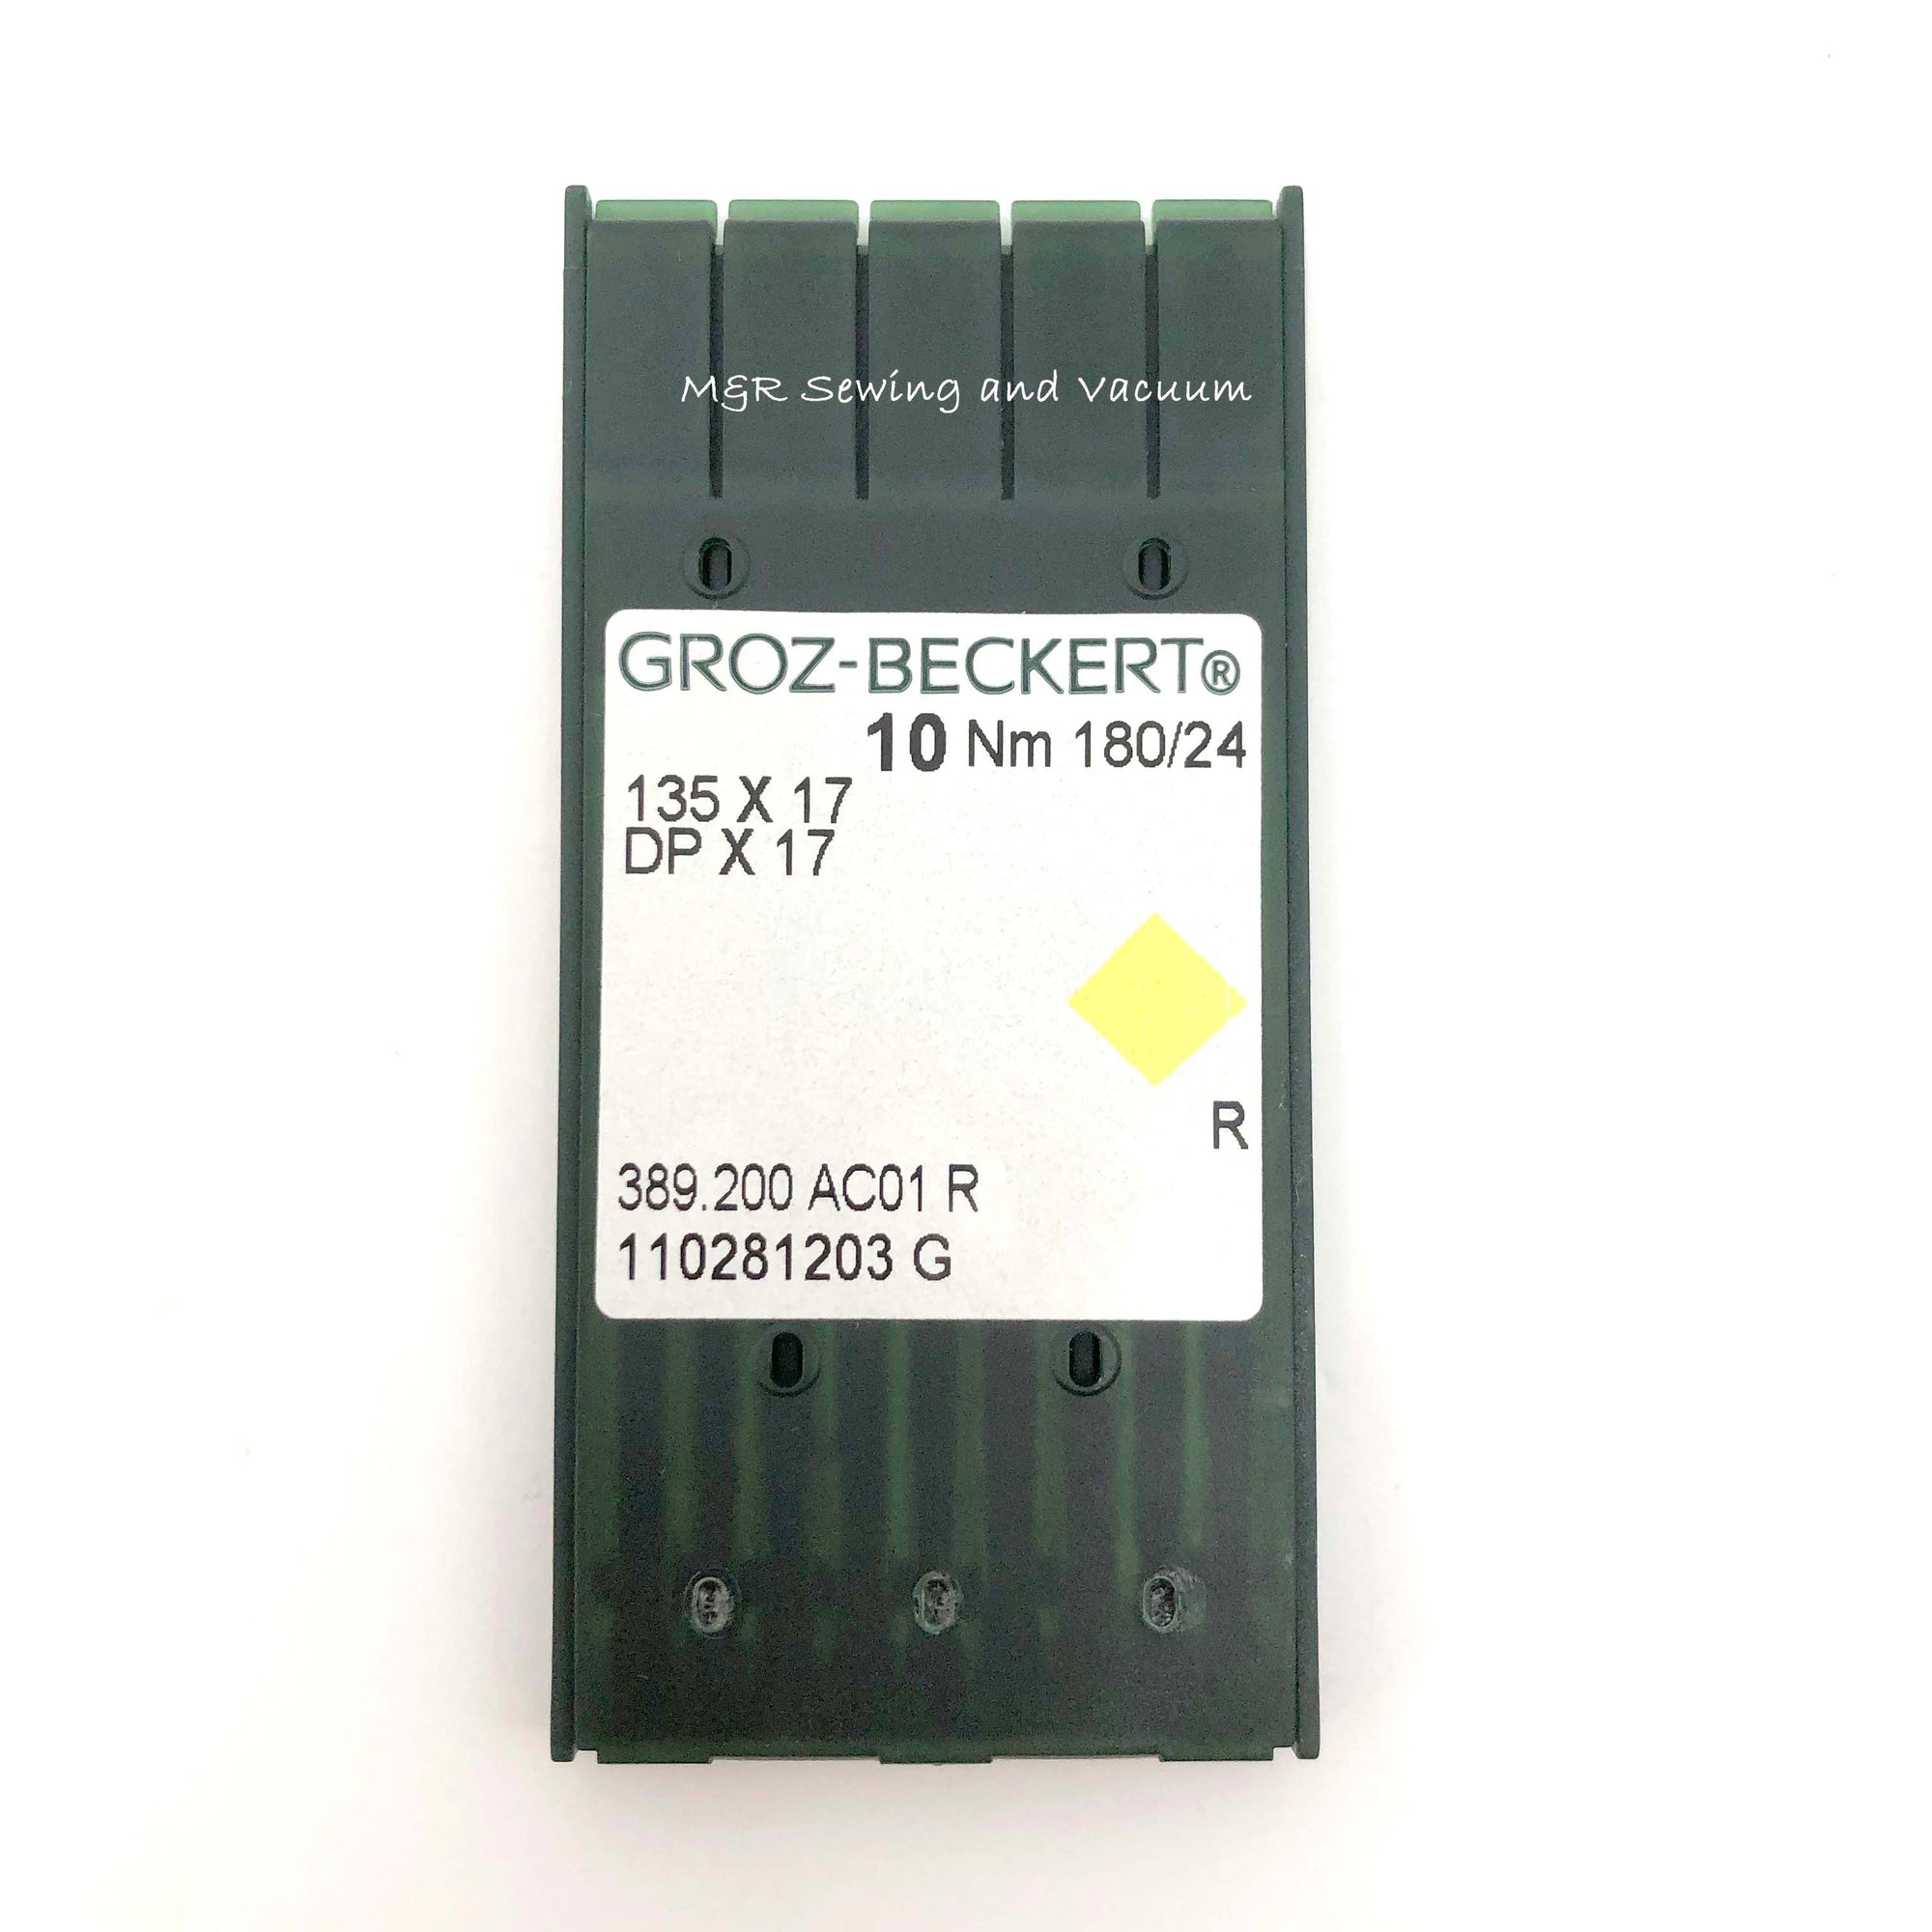 Groz-Beckert 135x17 Industrial Needles - 180/24